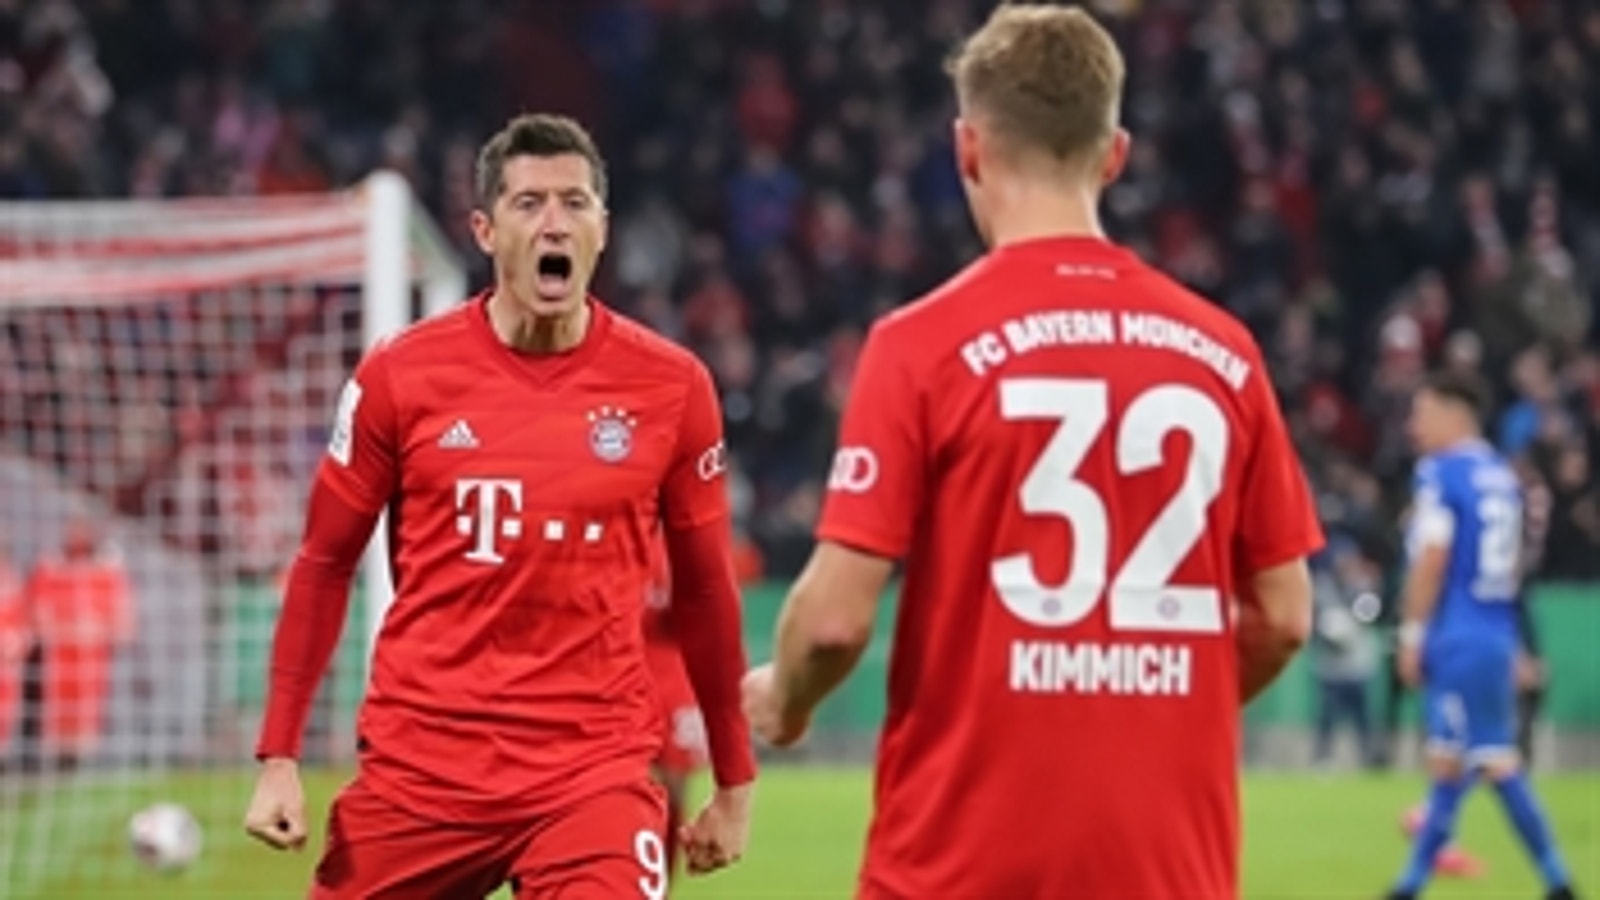 Watch all 22 of Robert Lewandowski's goals from this season in Bundesliga